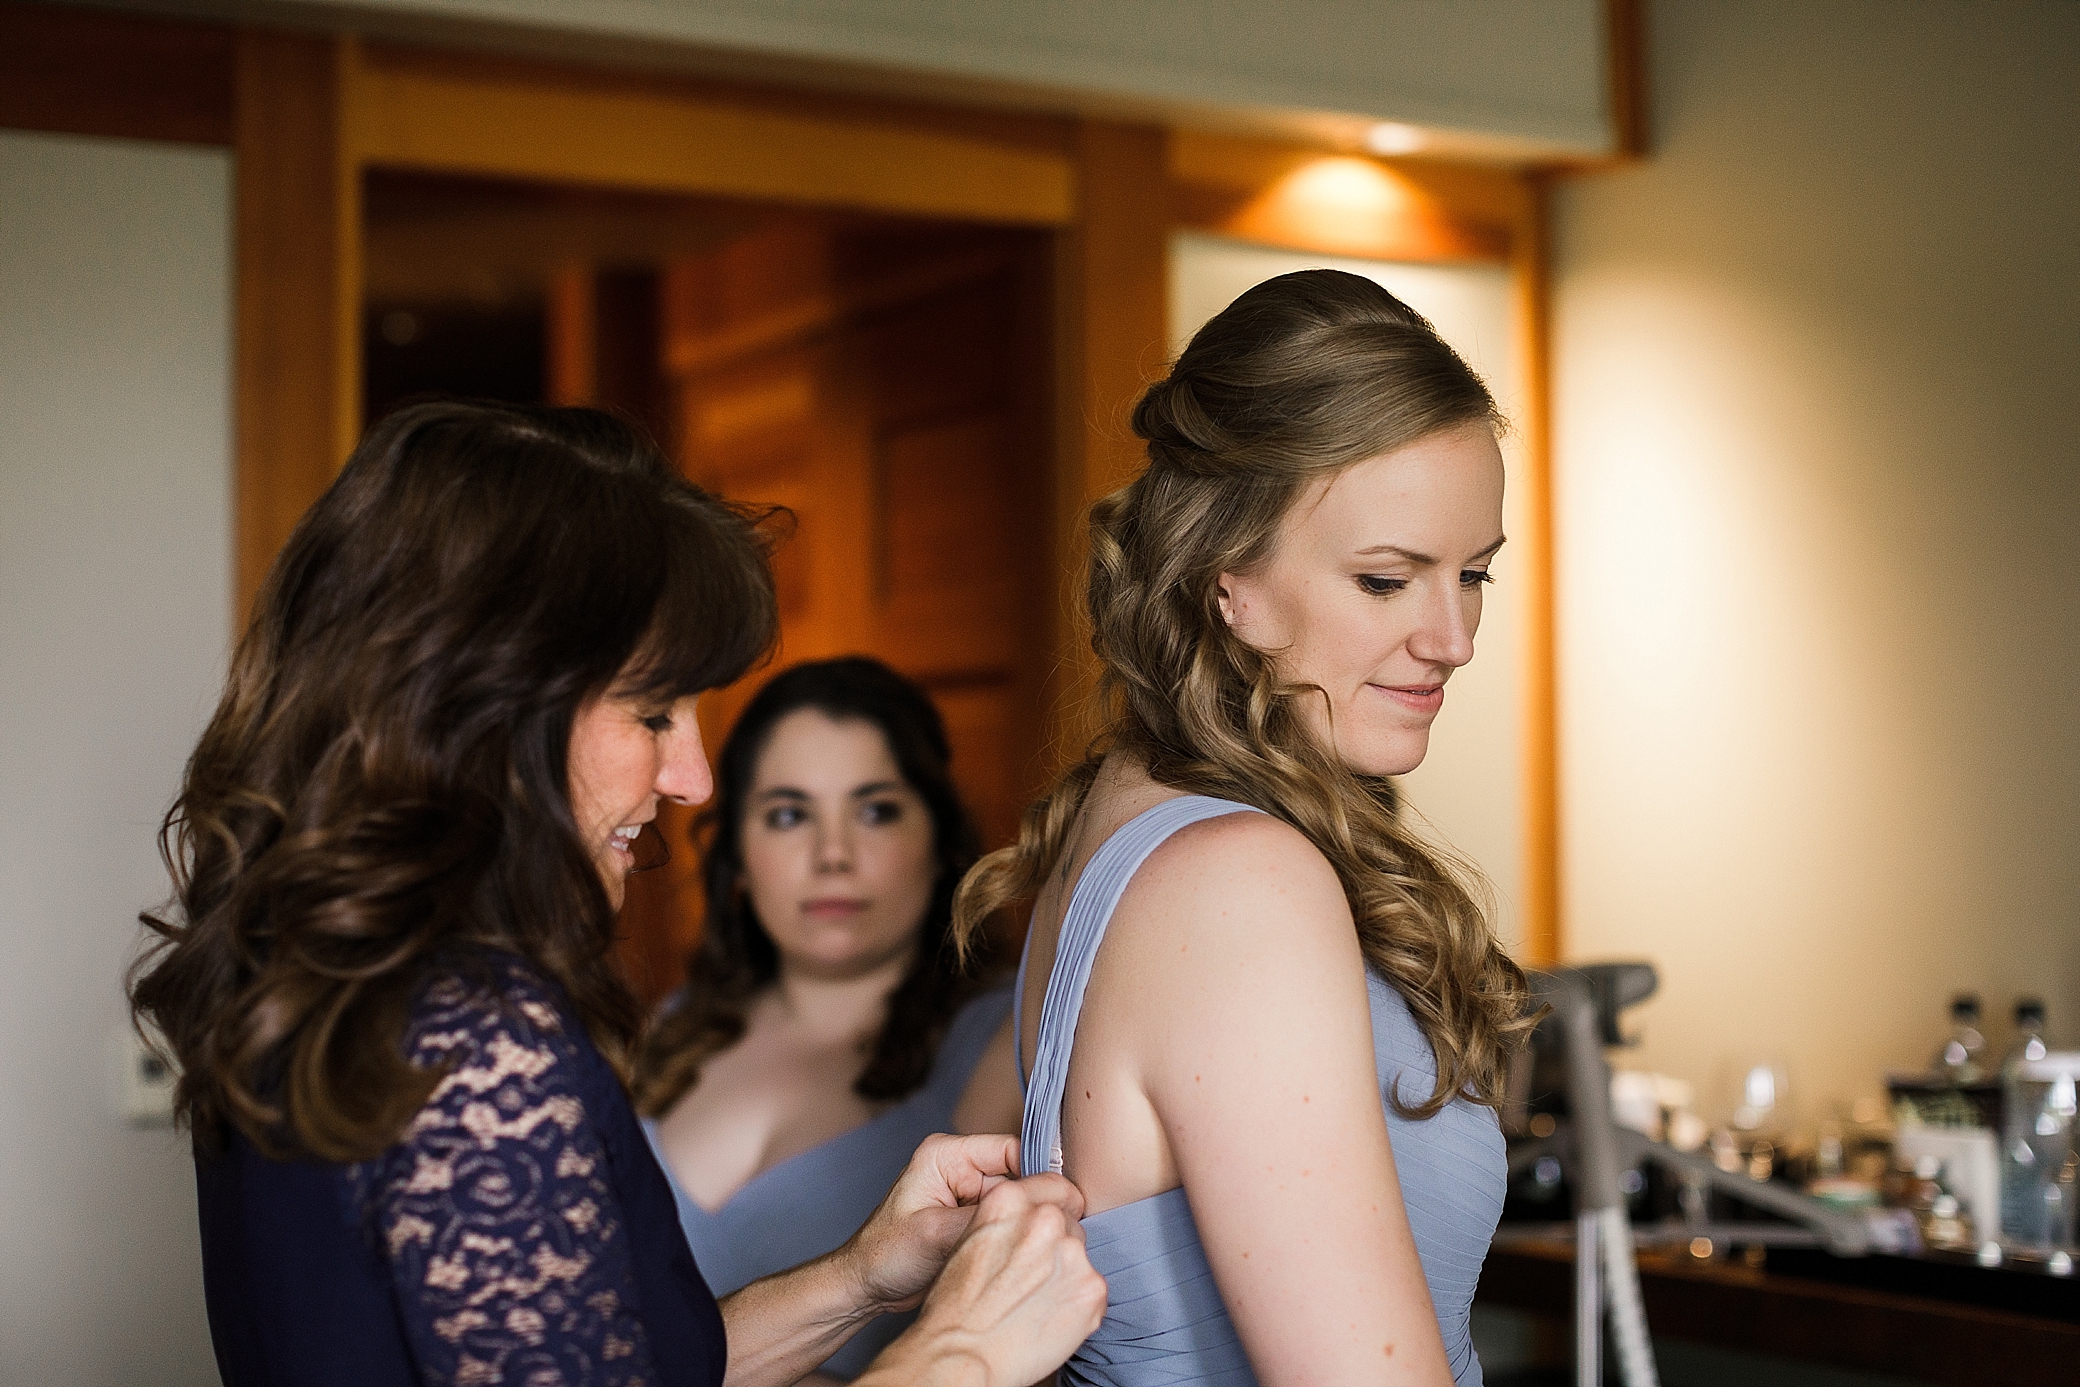 Getting ready wedding photos | Megan Montalvo Photography 